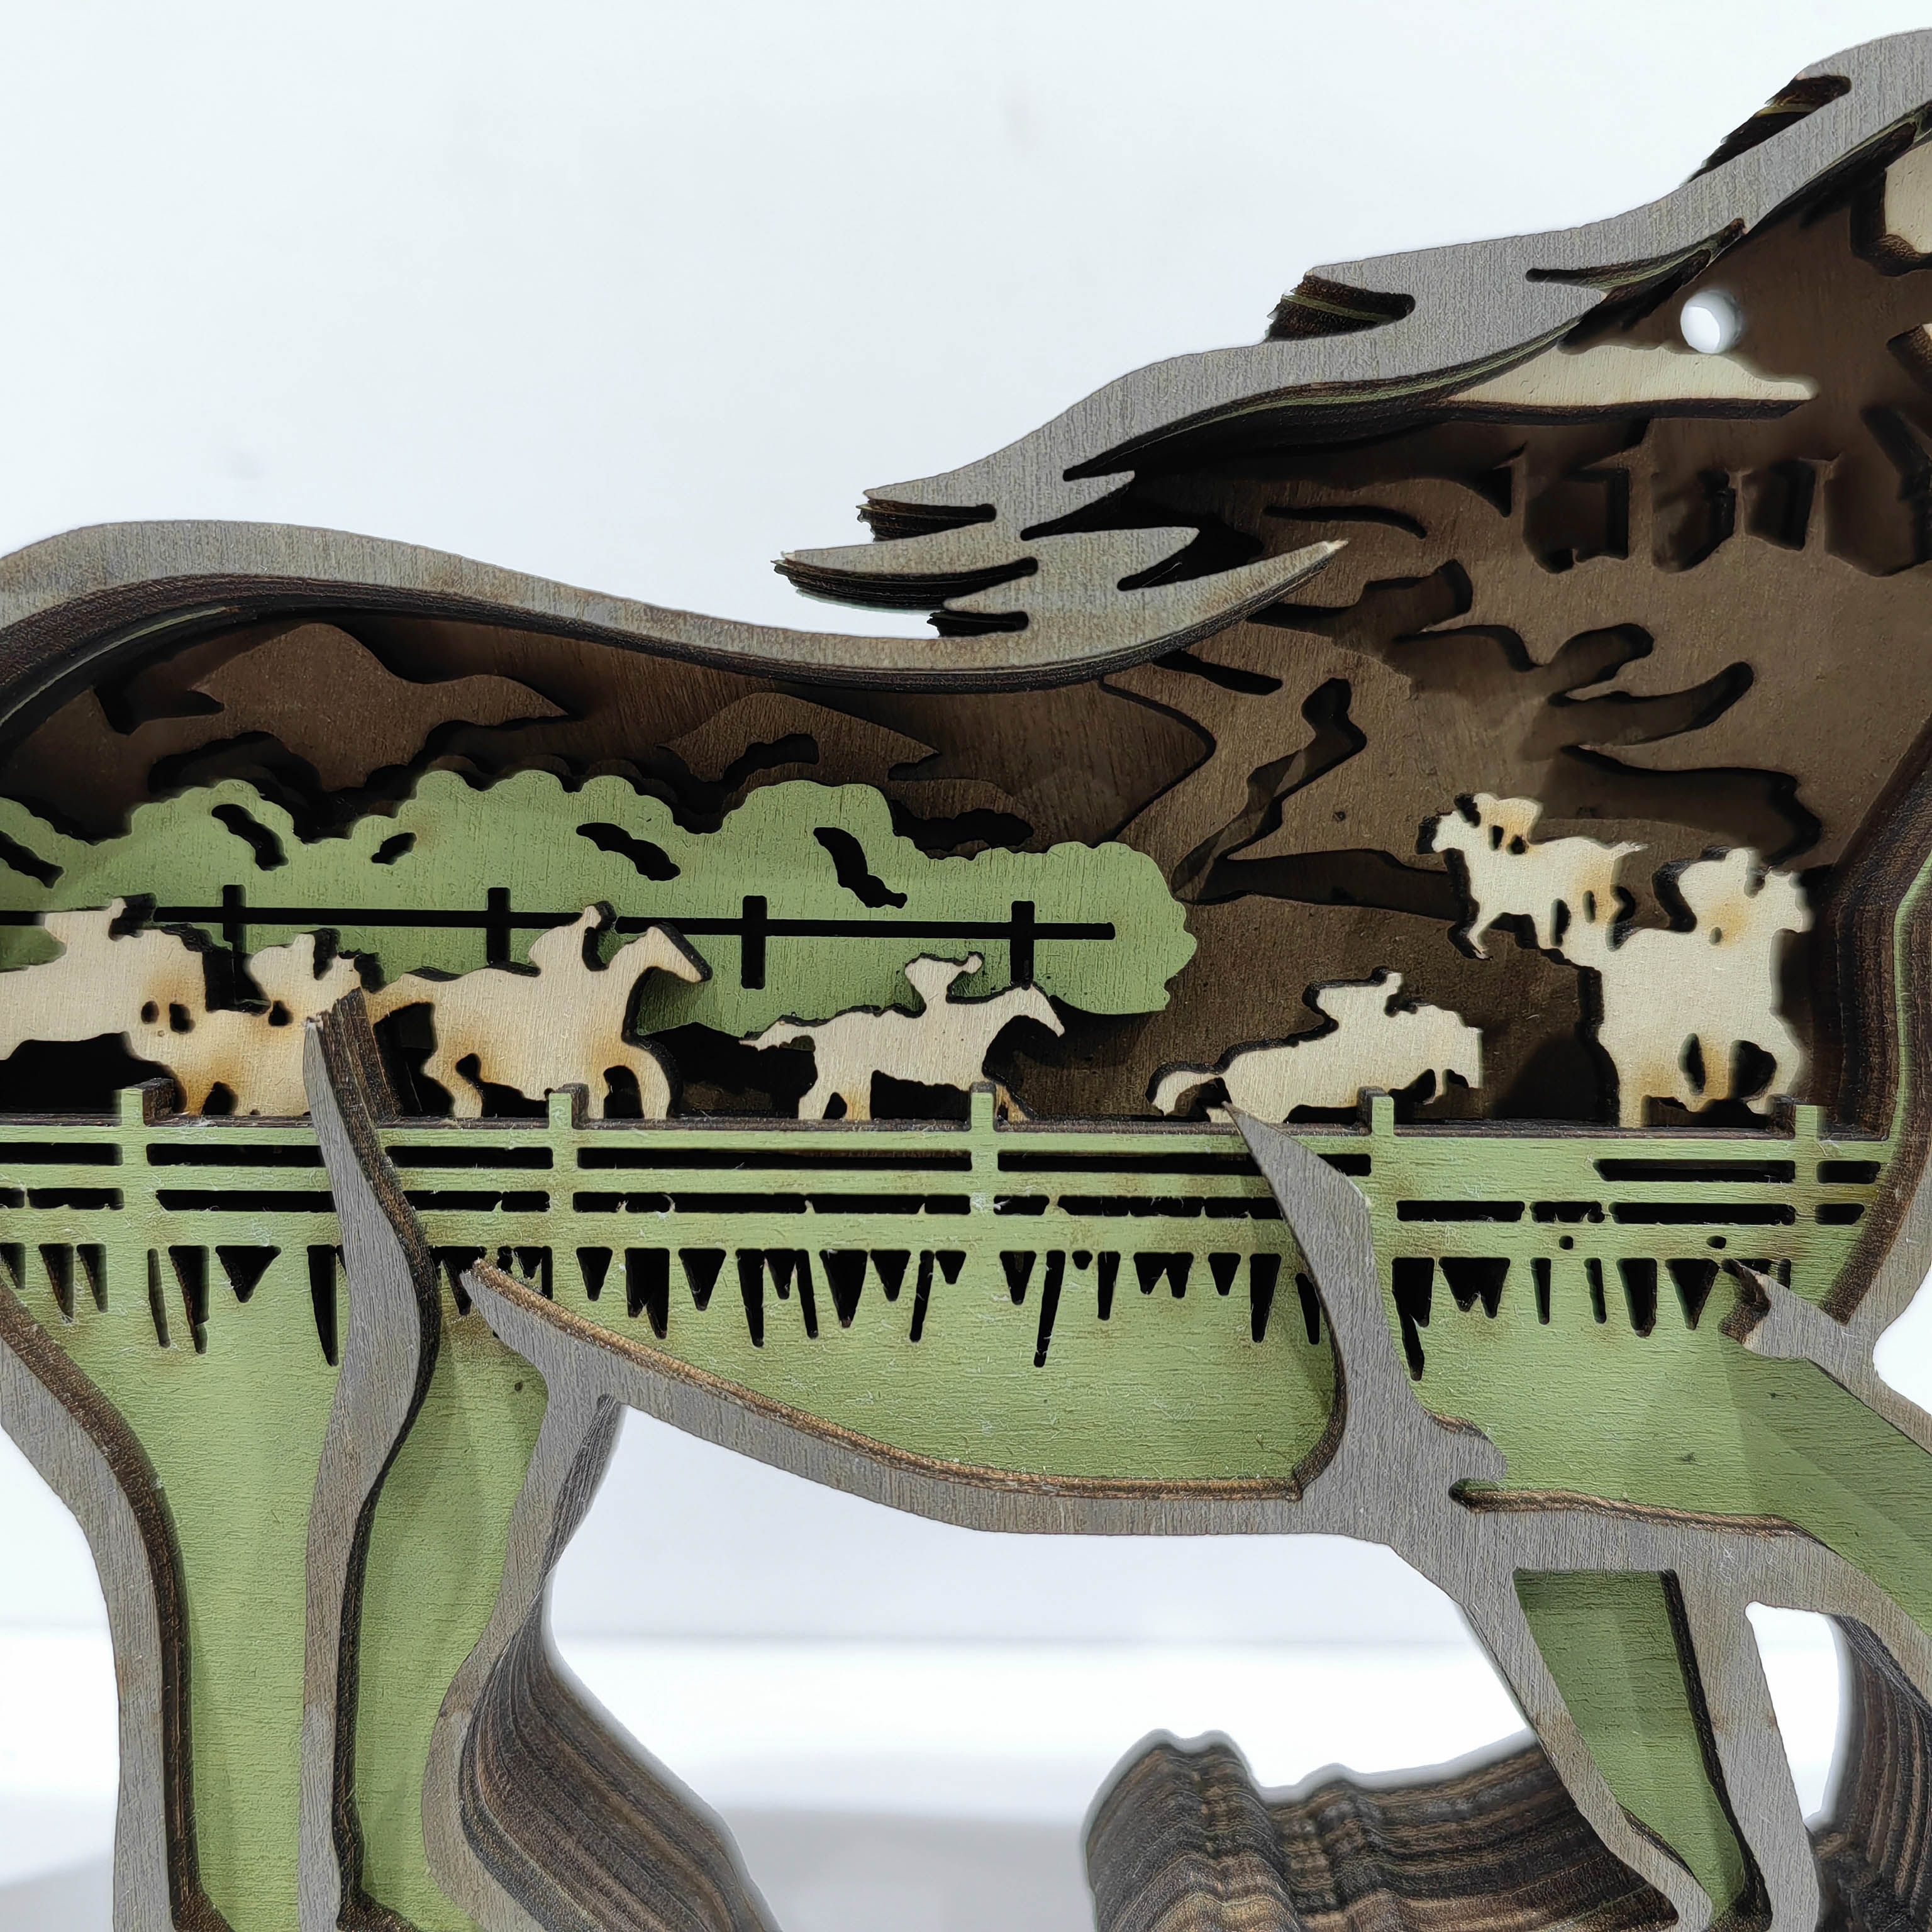 HOT SALE🔥-Pommel horse Carving Handicraft Gift